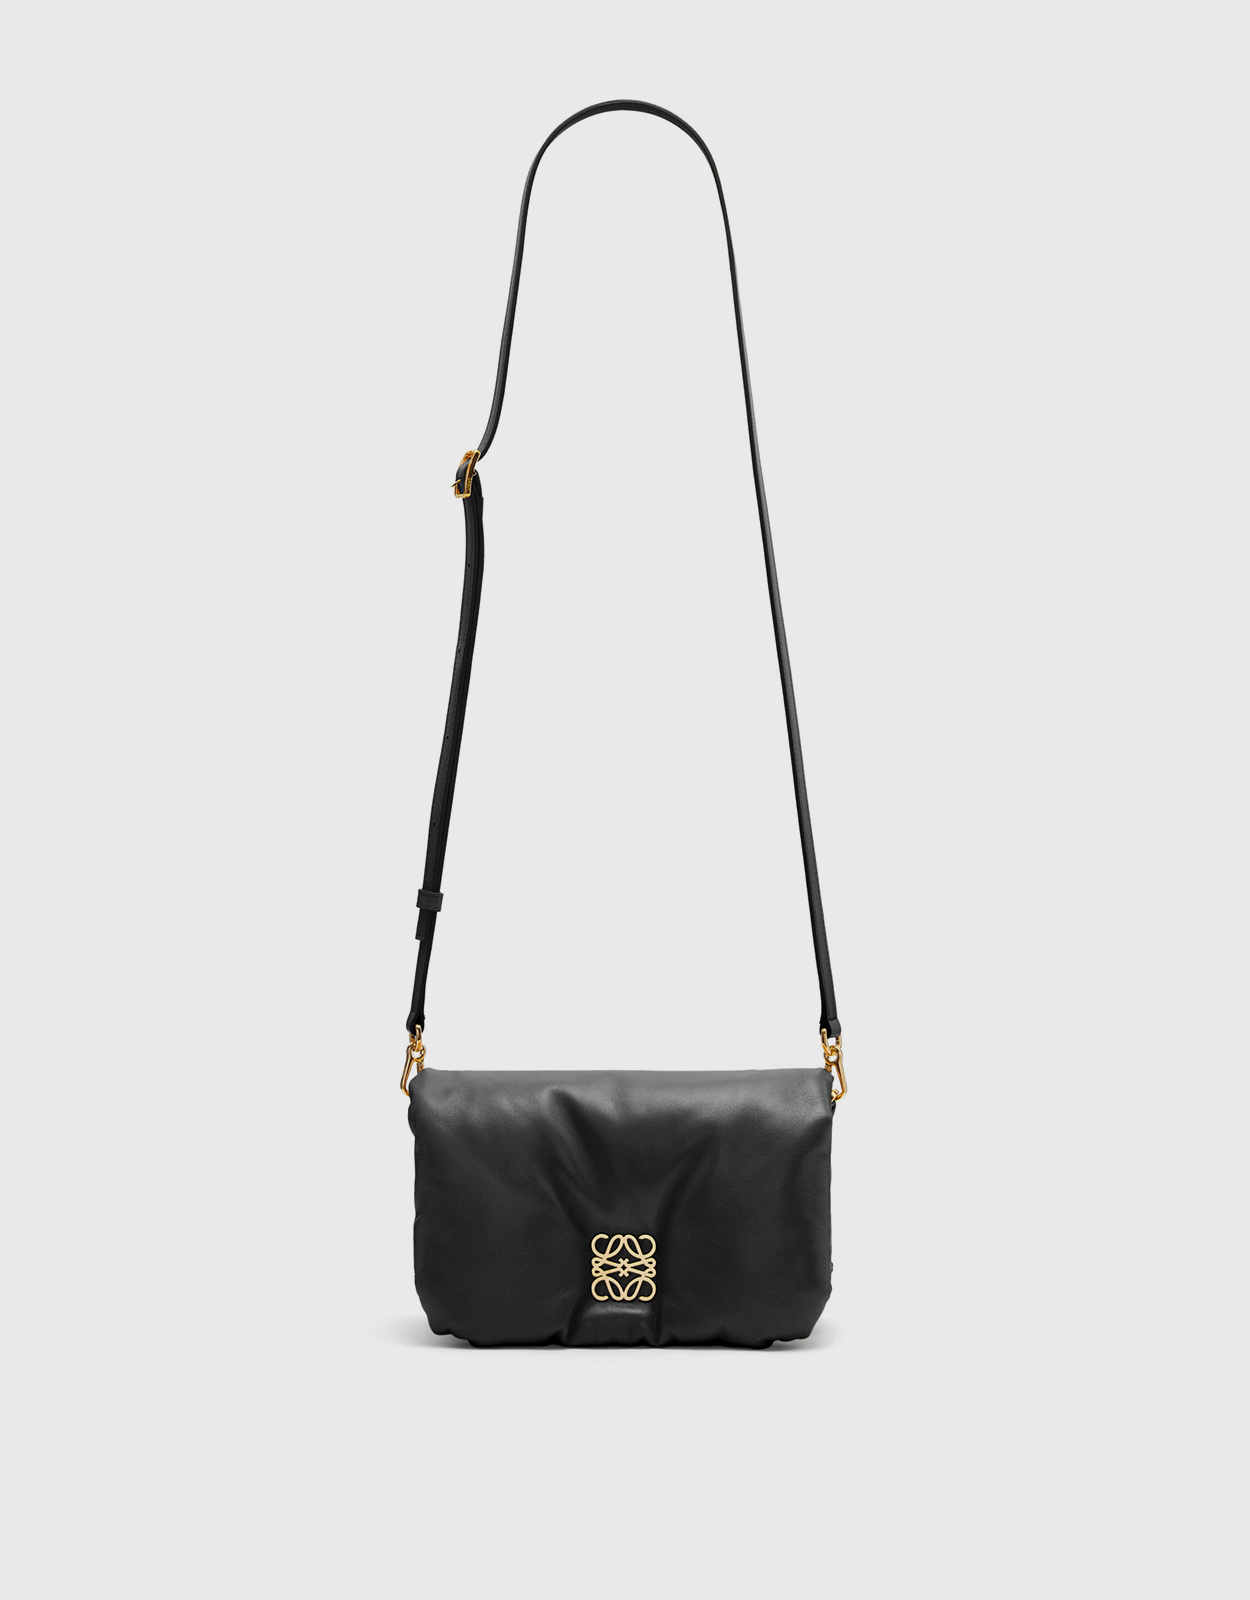 Shop LOEWE GOYA Puffer Goya bag in shiny nappa lambskin (AP40P41X01) by  selectme38